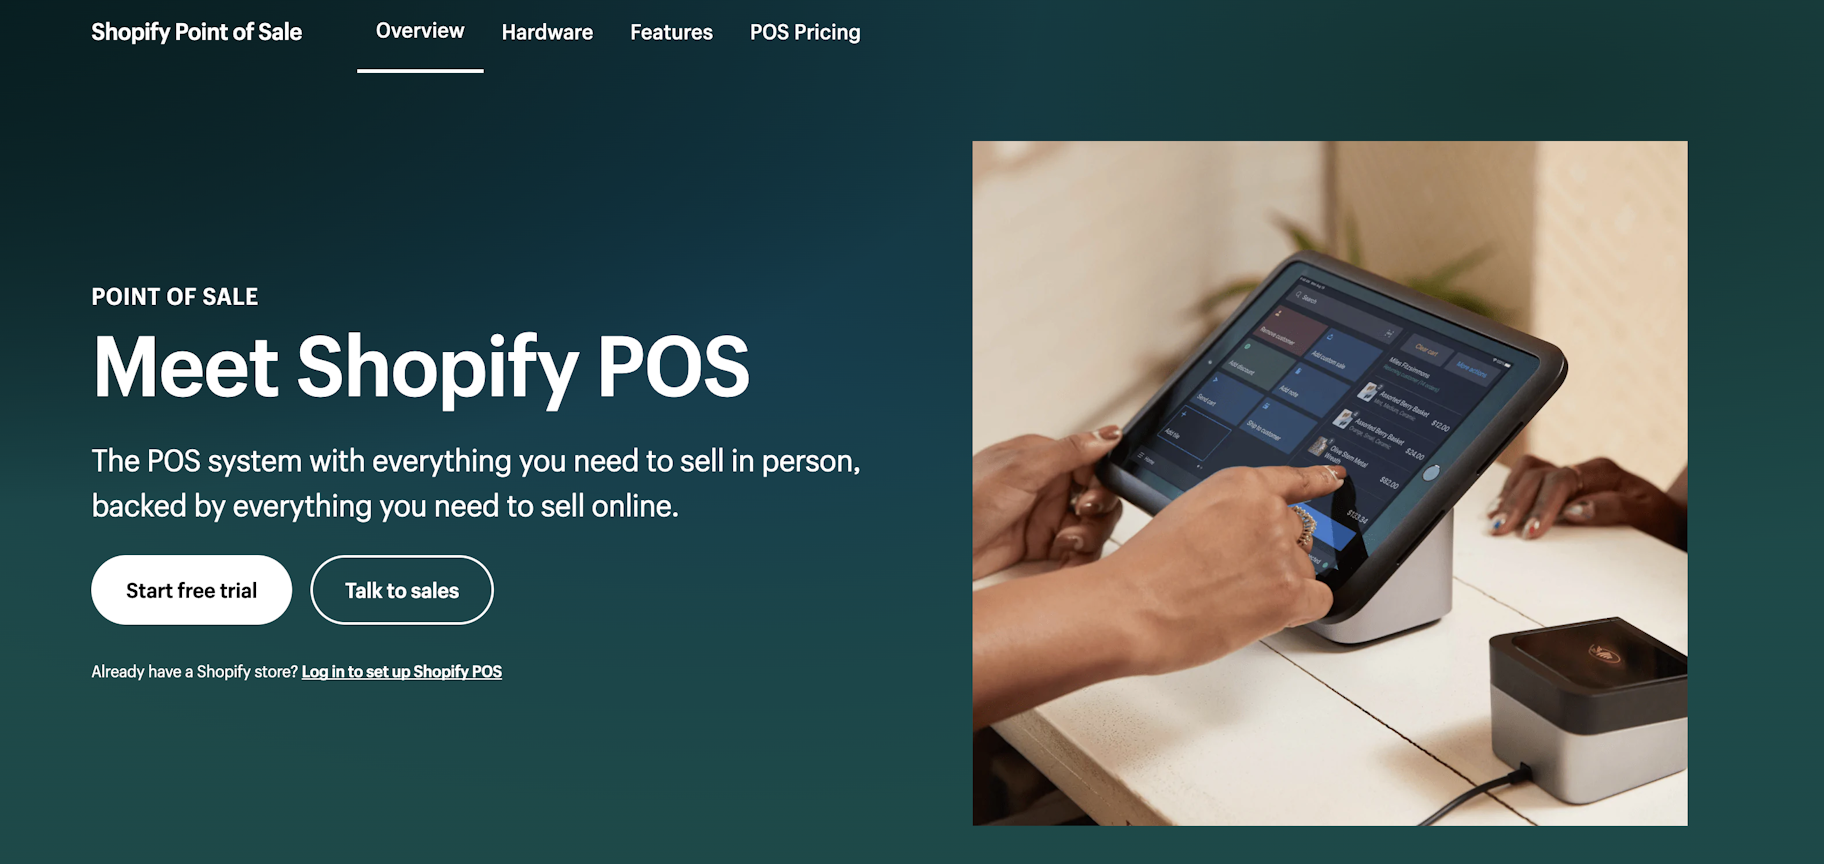 Meet Shopify POS